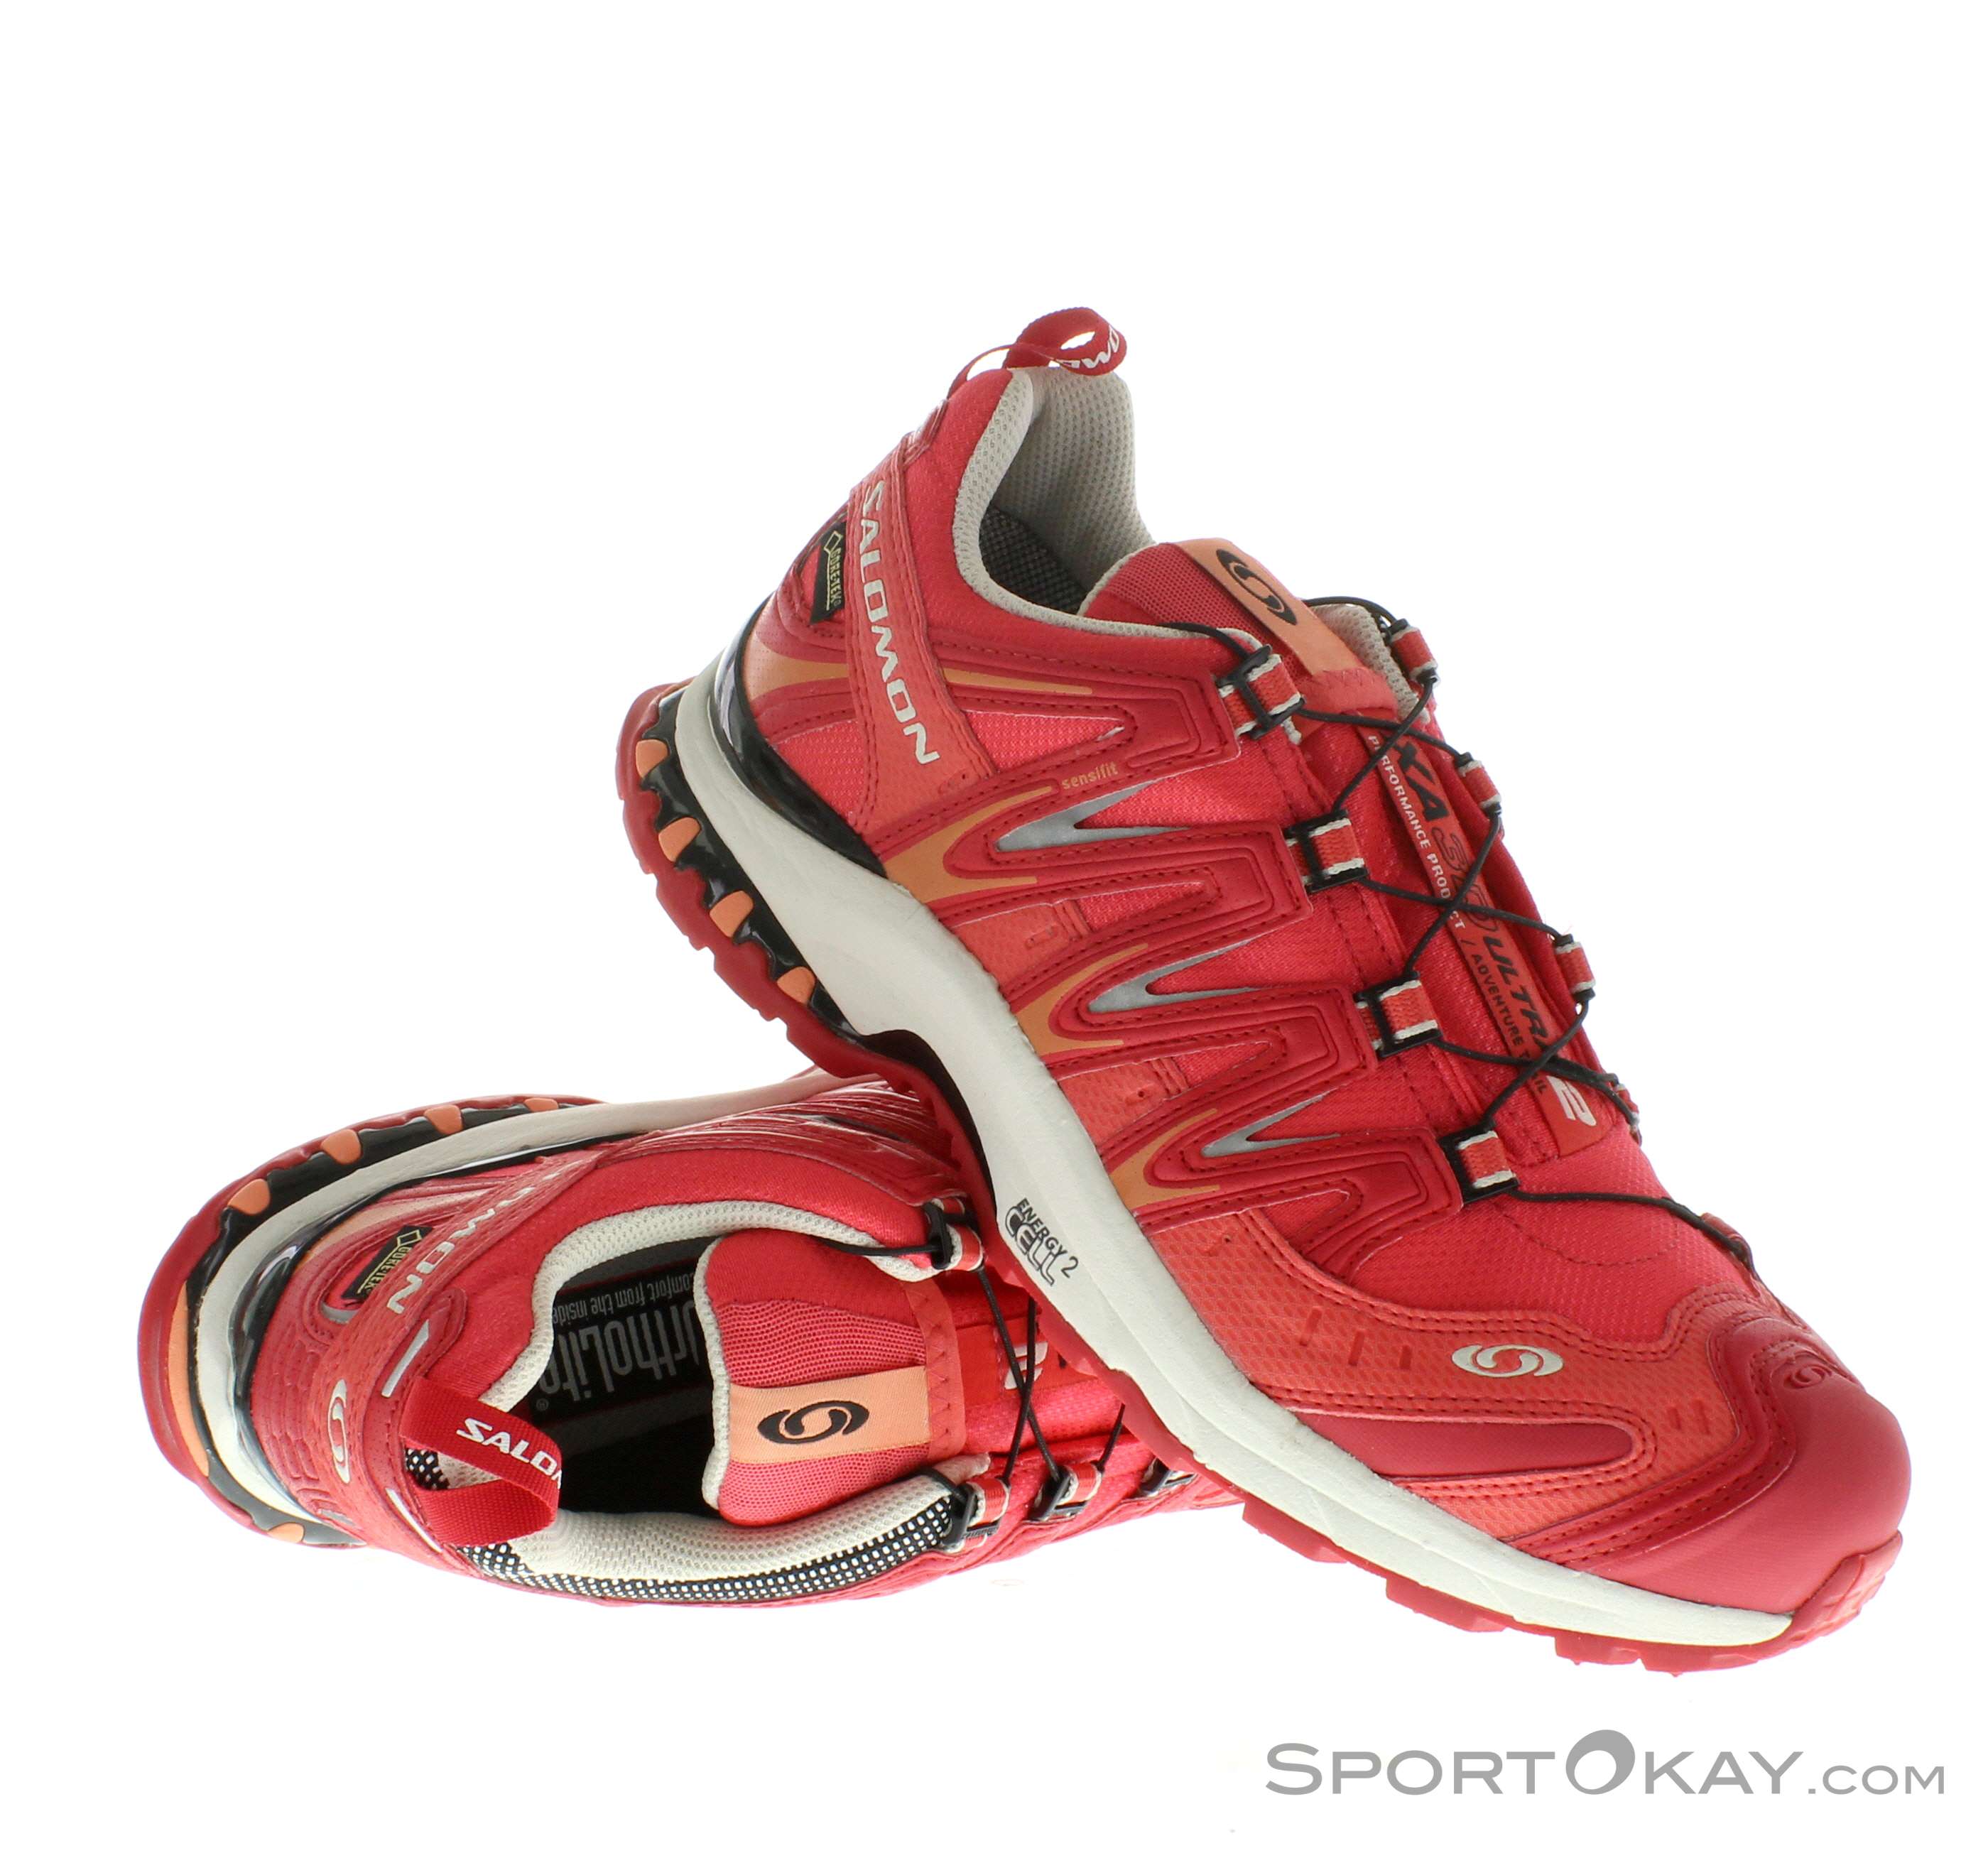 Salomon XA Pro 3D Ultra 2 Damen Traillaufschuhe Gore-Tex - Traillaufschuhe Laufschuhe - Running - Alle